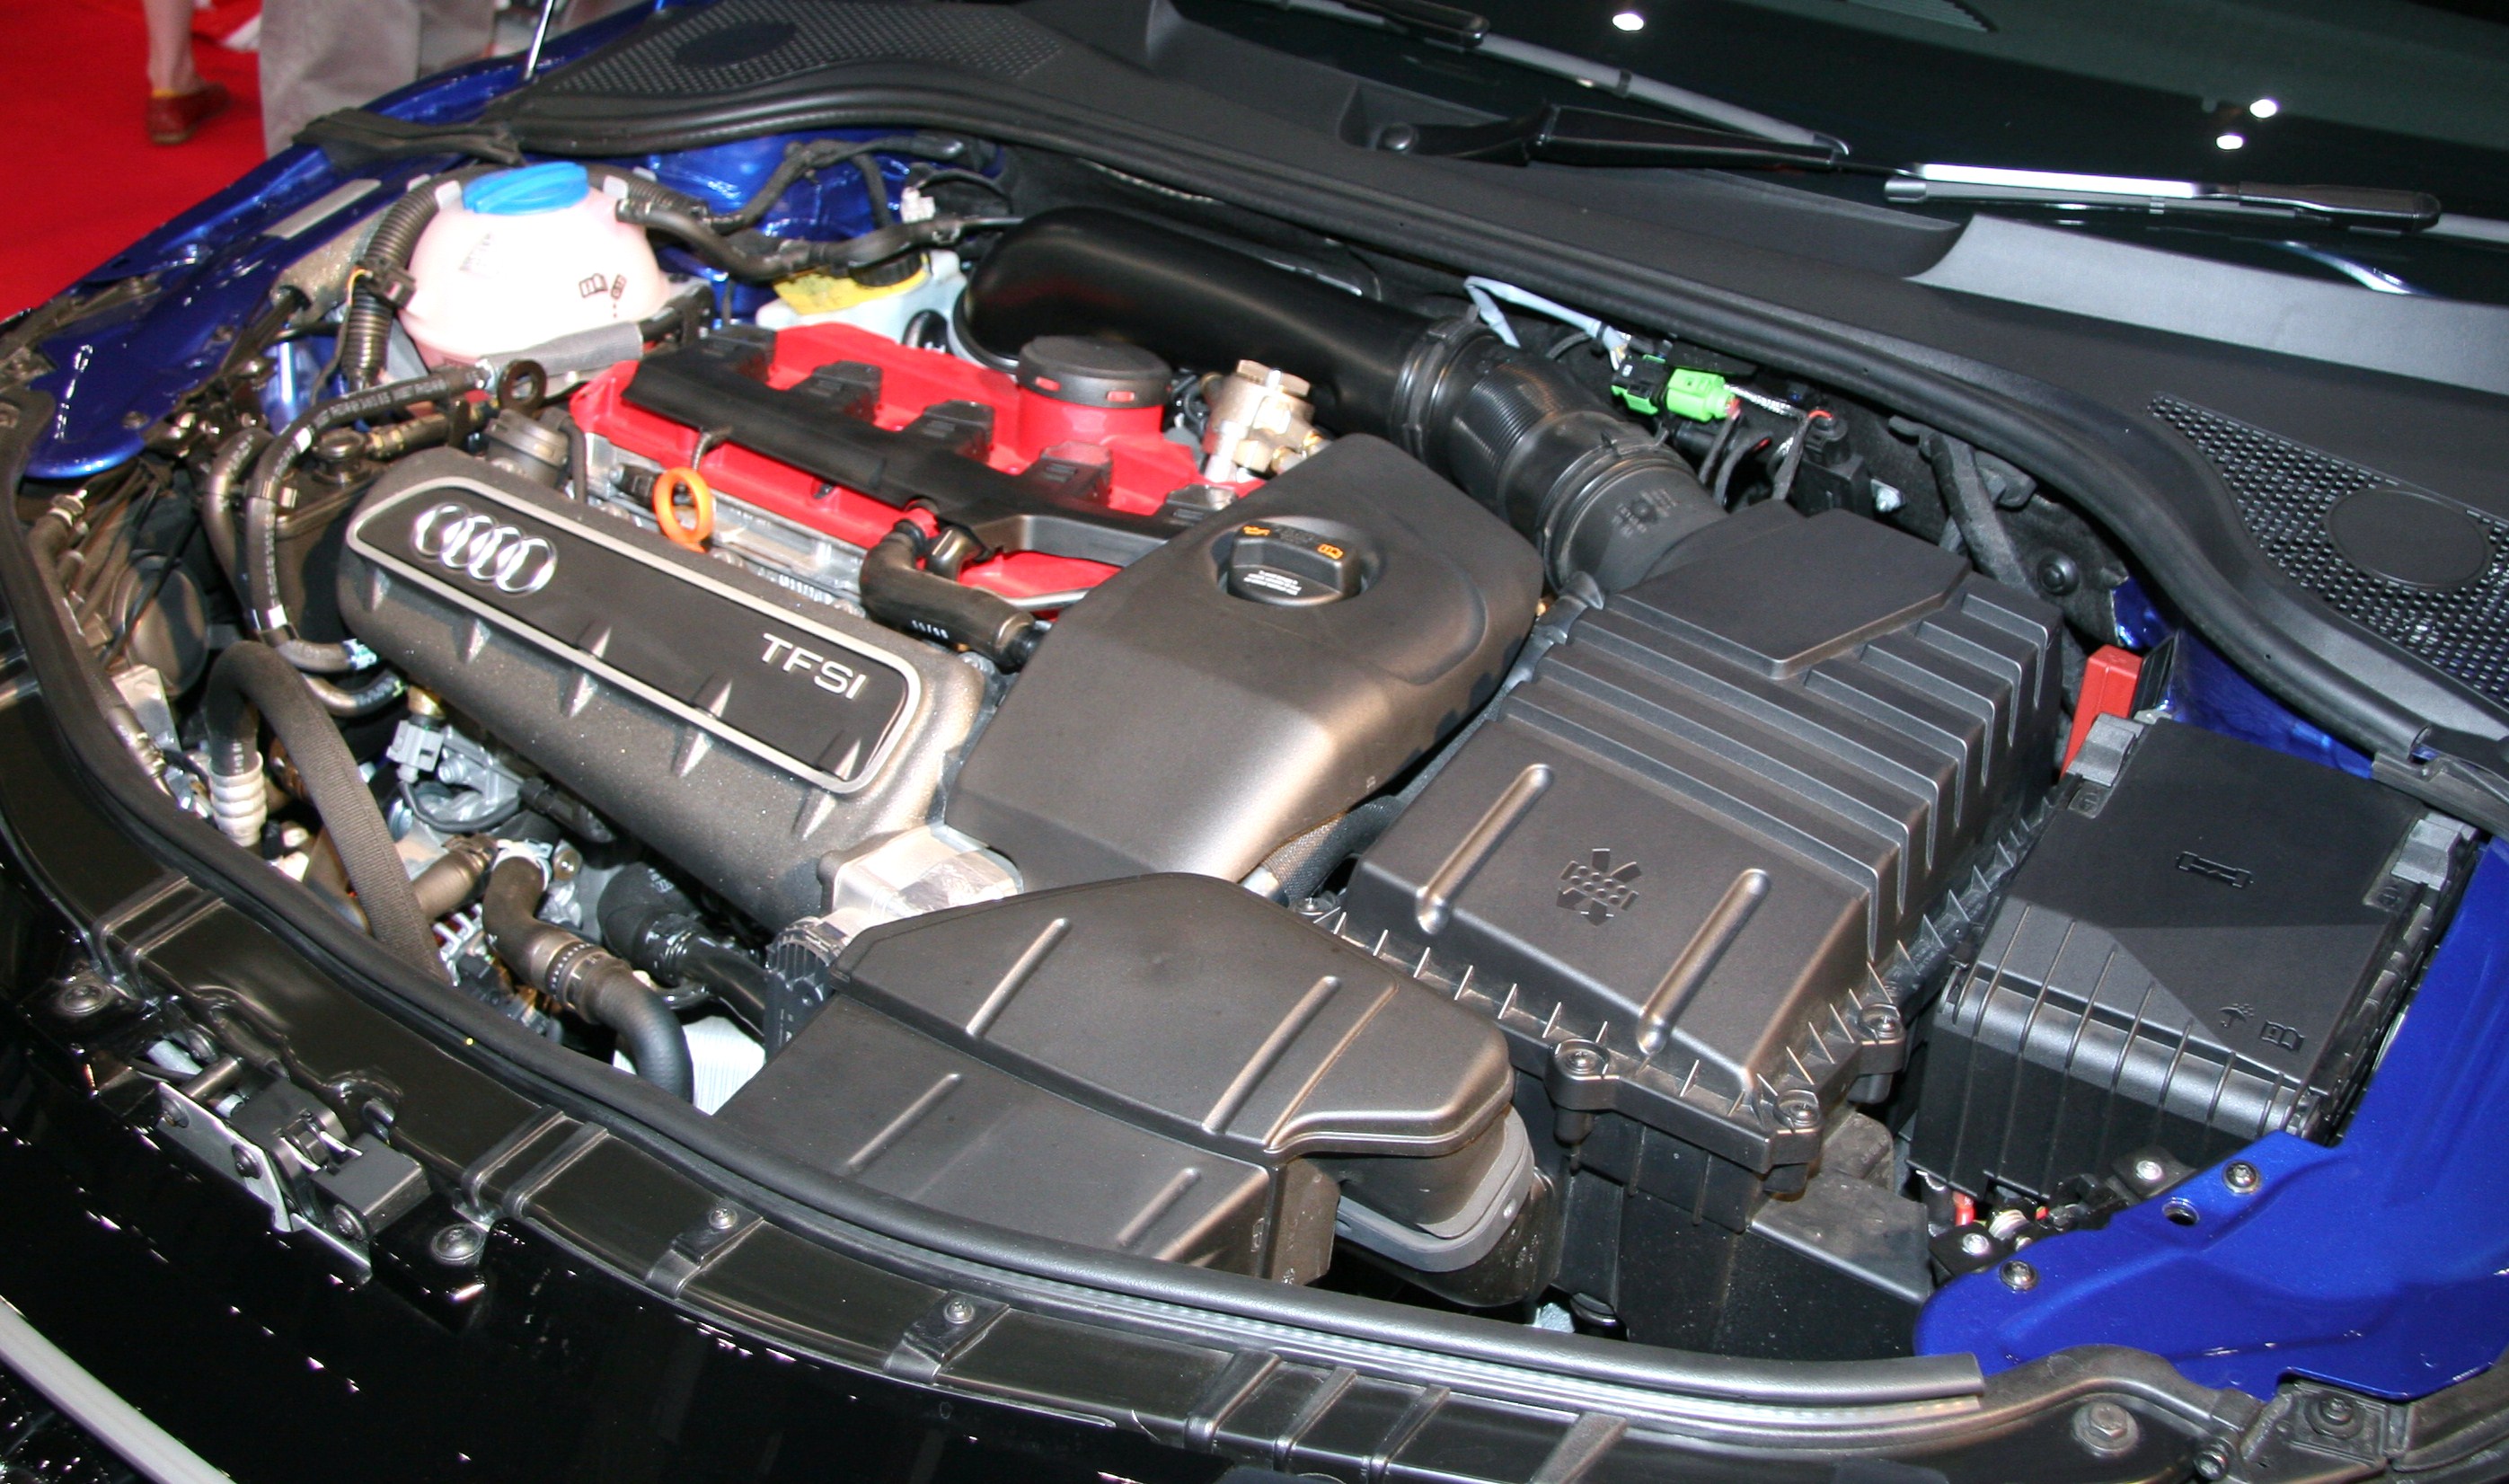 AUDI TT engine